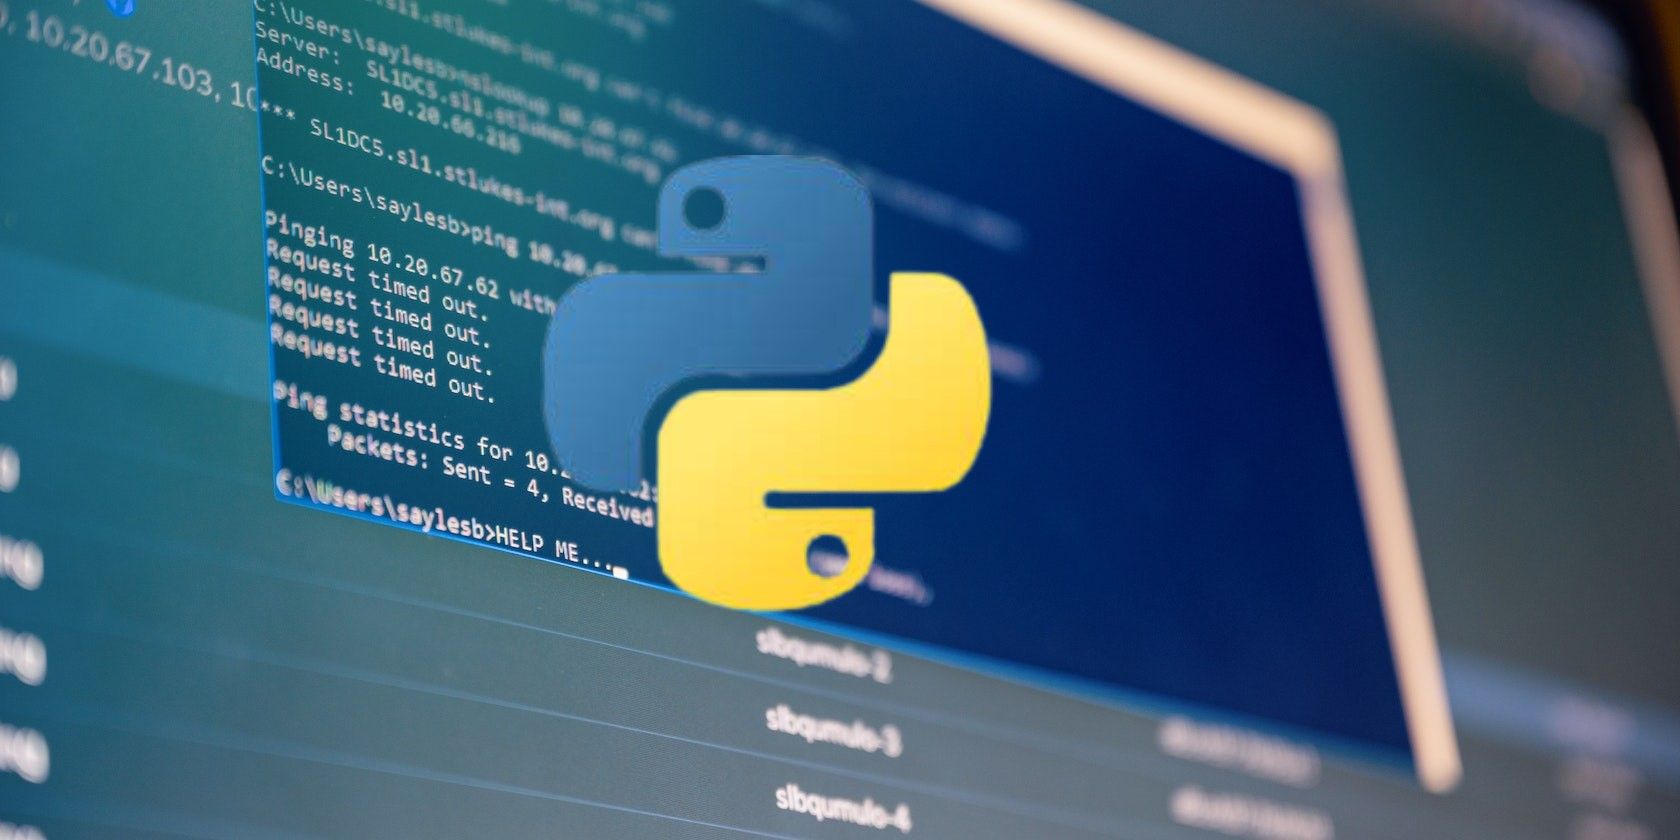 Computer's terminal with Python logo overlaid